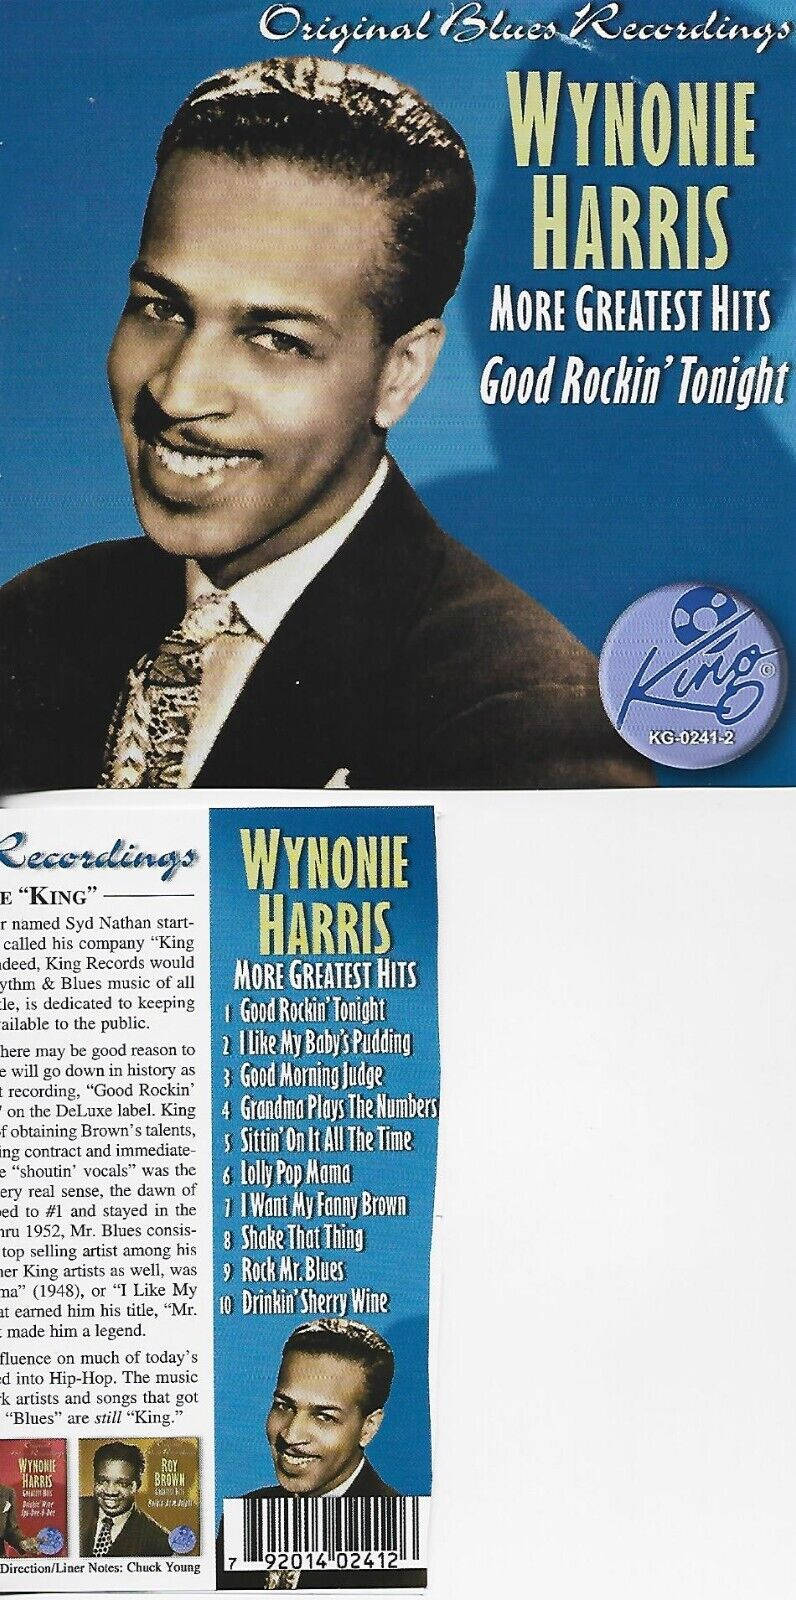 Wynonie Harris More Greatest Hits Album Cover Wallpaper